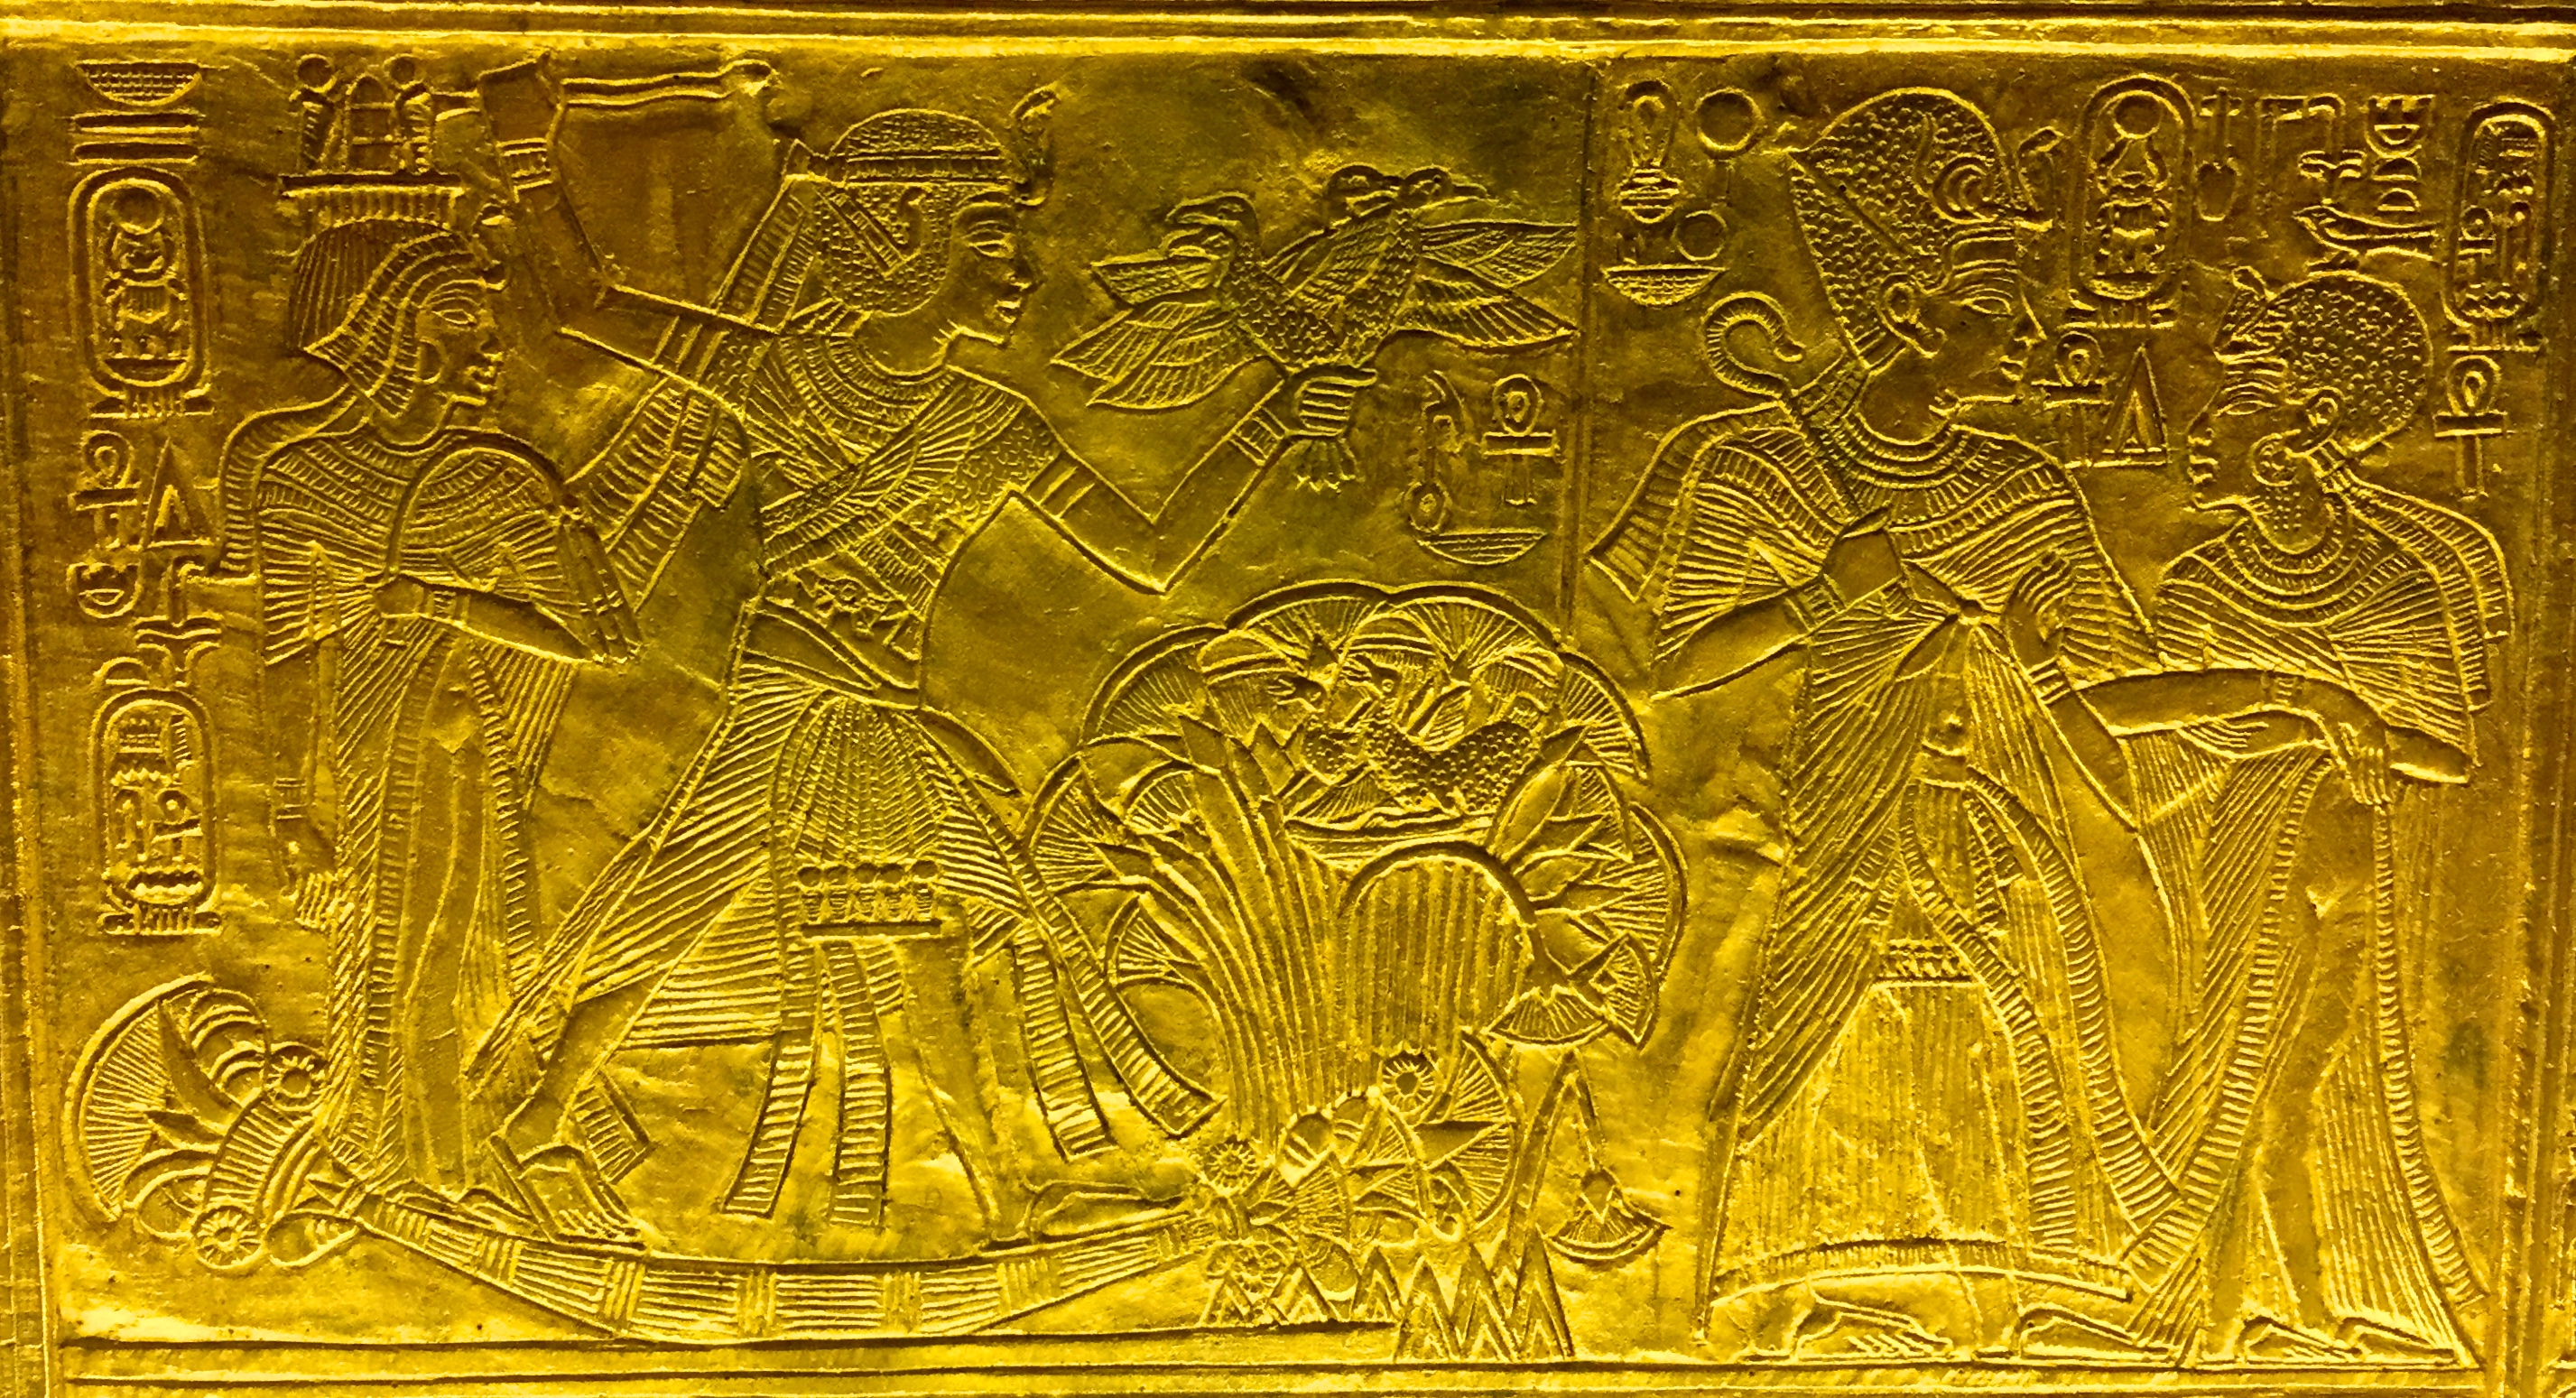 Double scene of Ankhesenamun and Tutankhamun